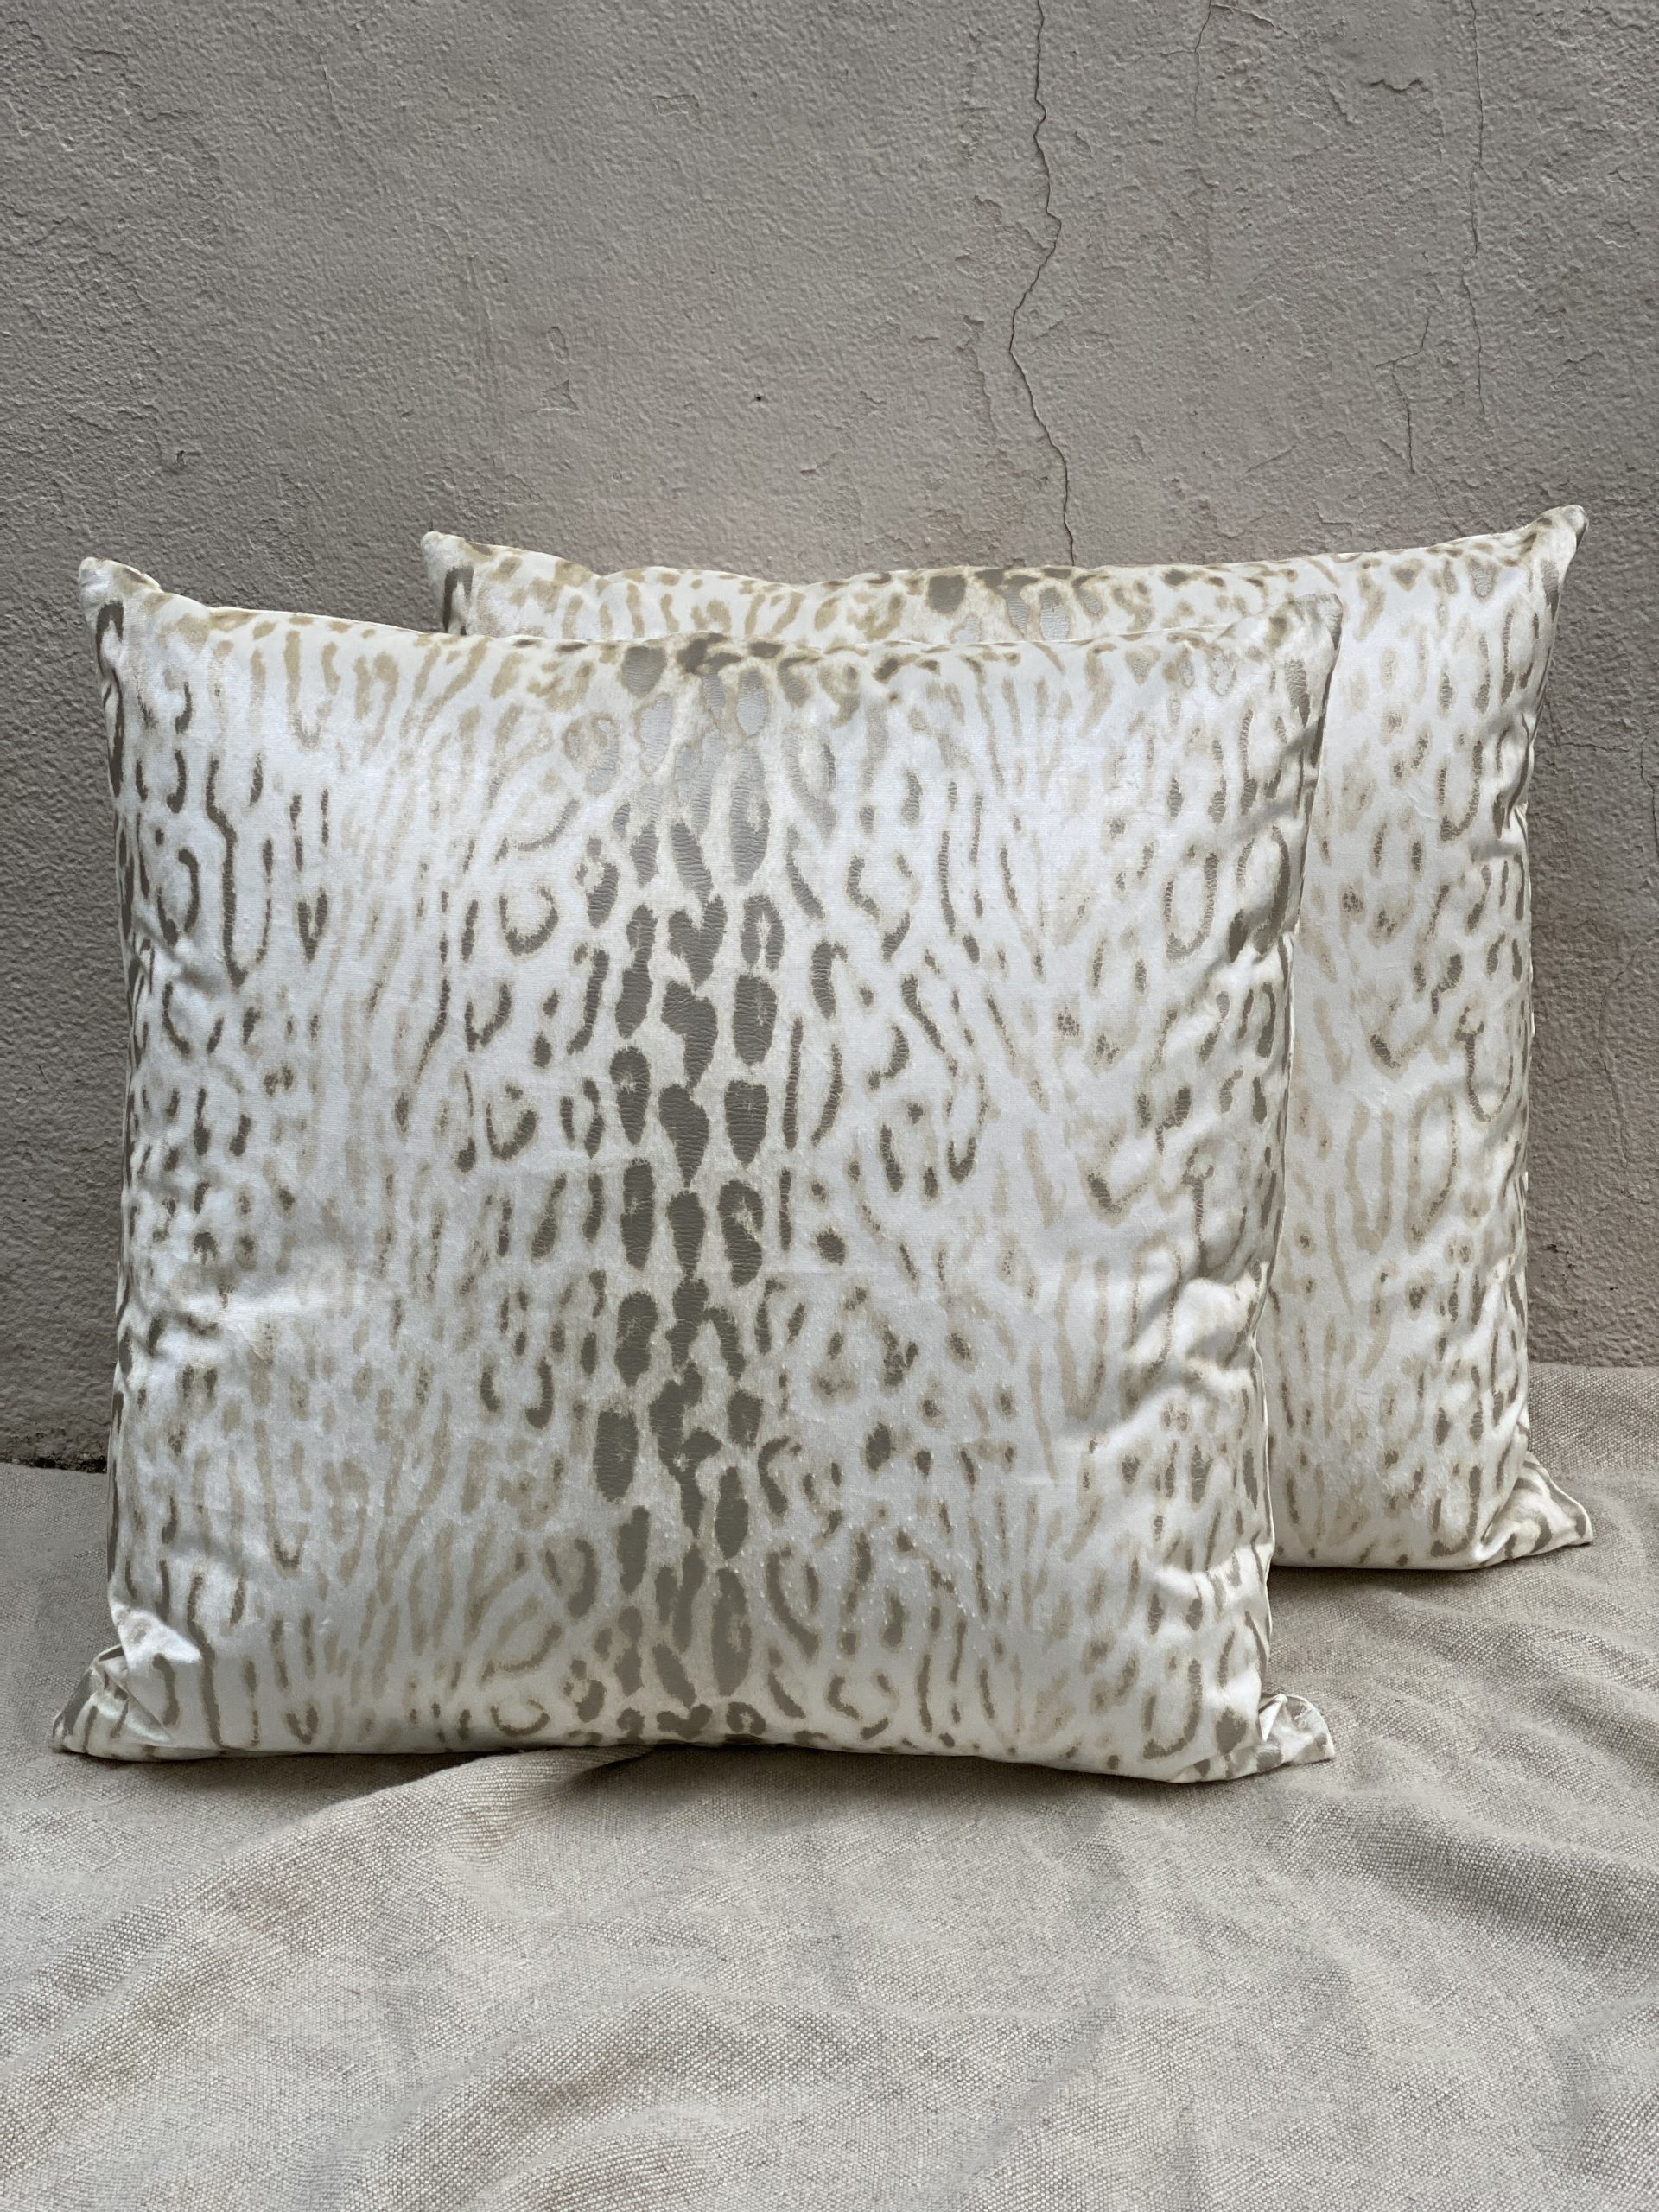 Animal Print Pillows